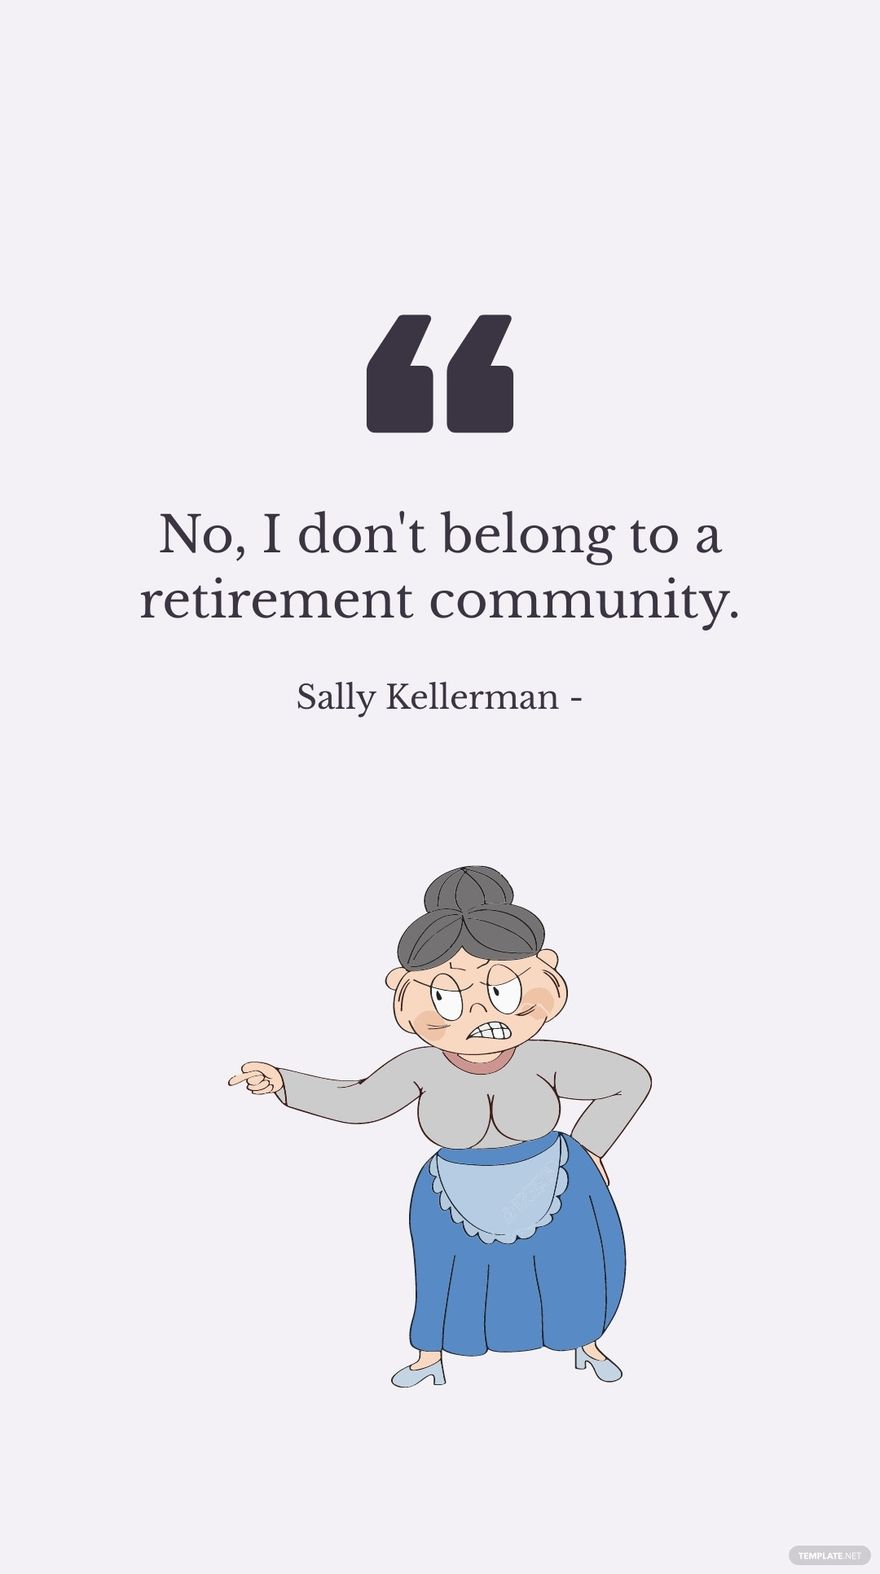 Free Sally Kellerman - No, I don't belong to a retirement community. in JPG